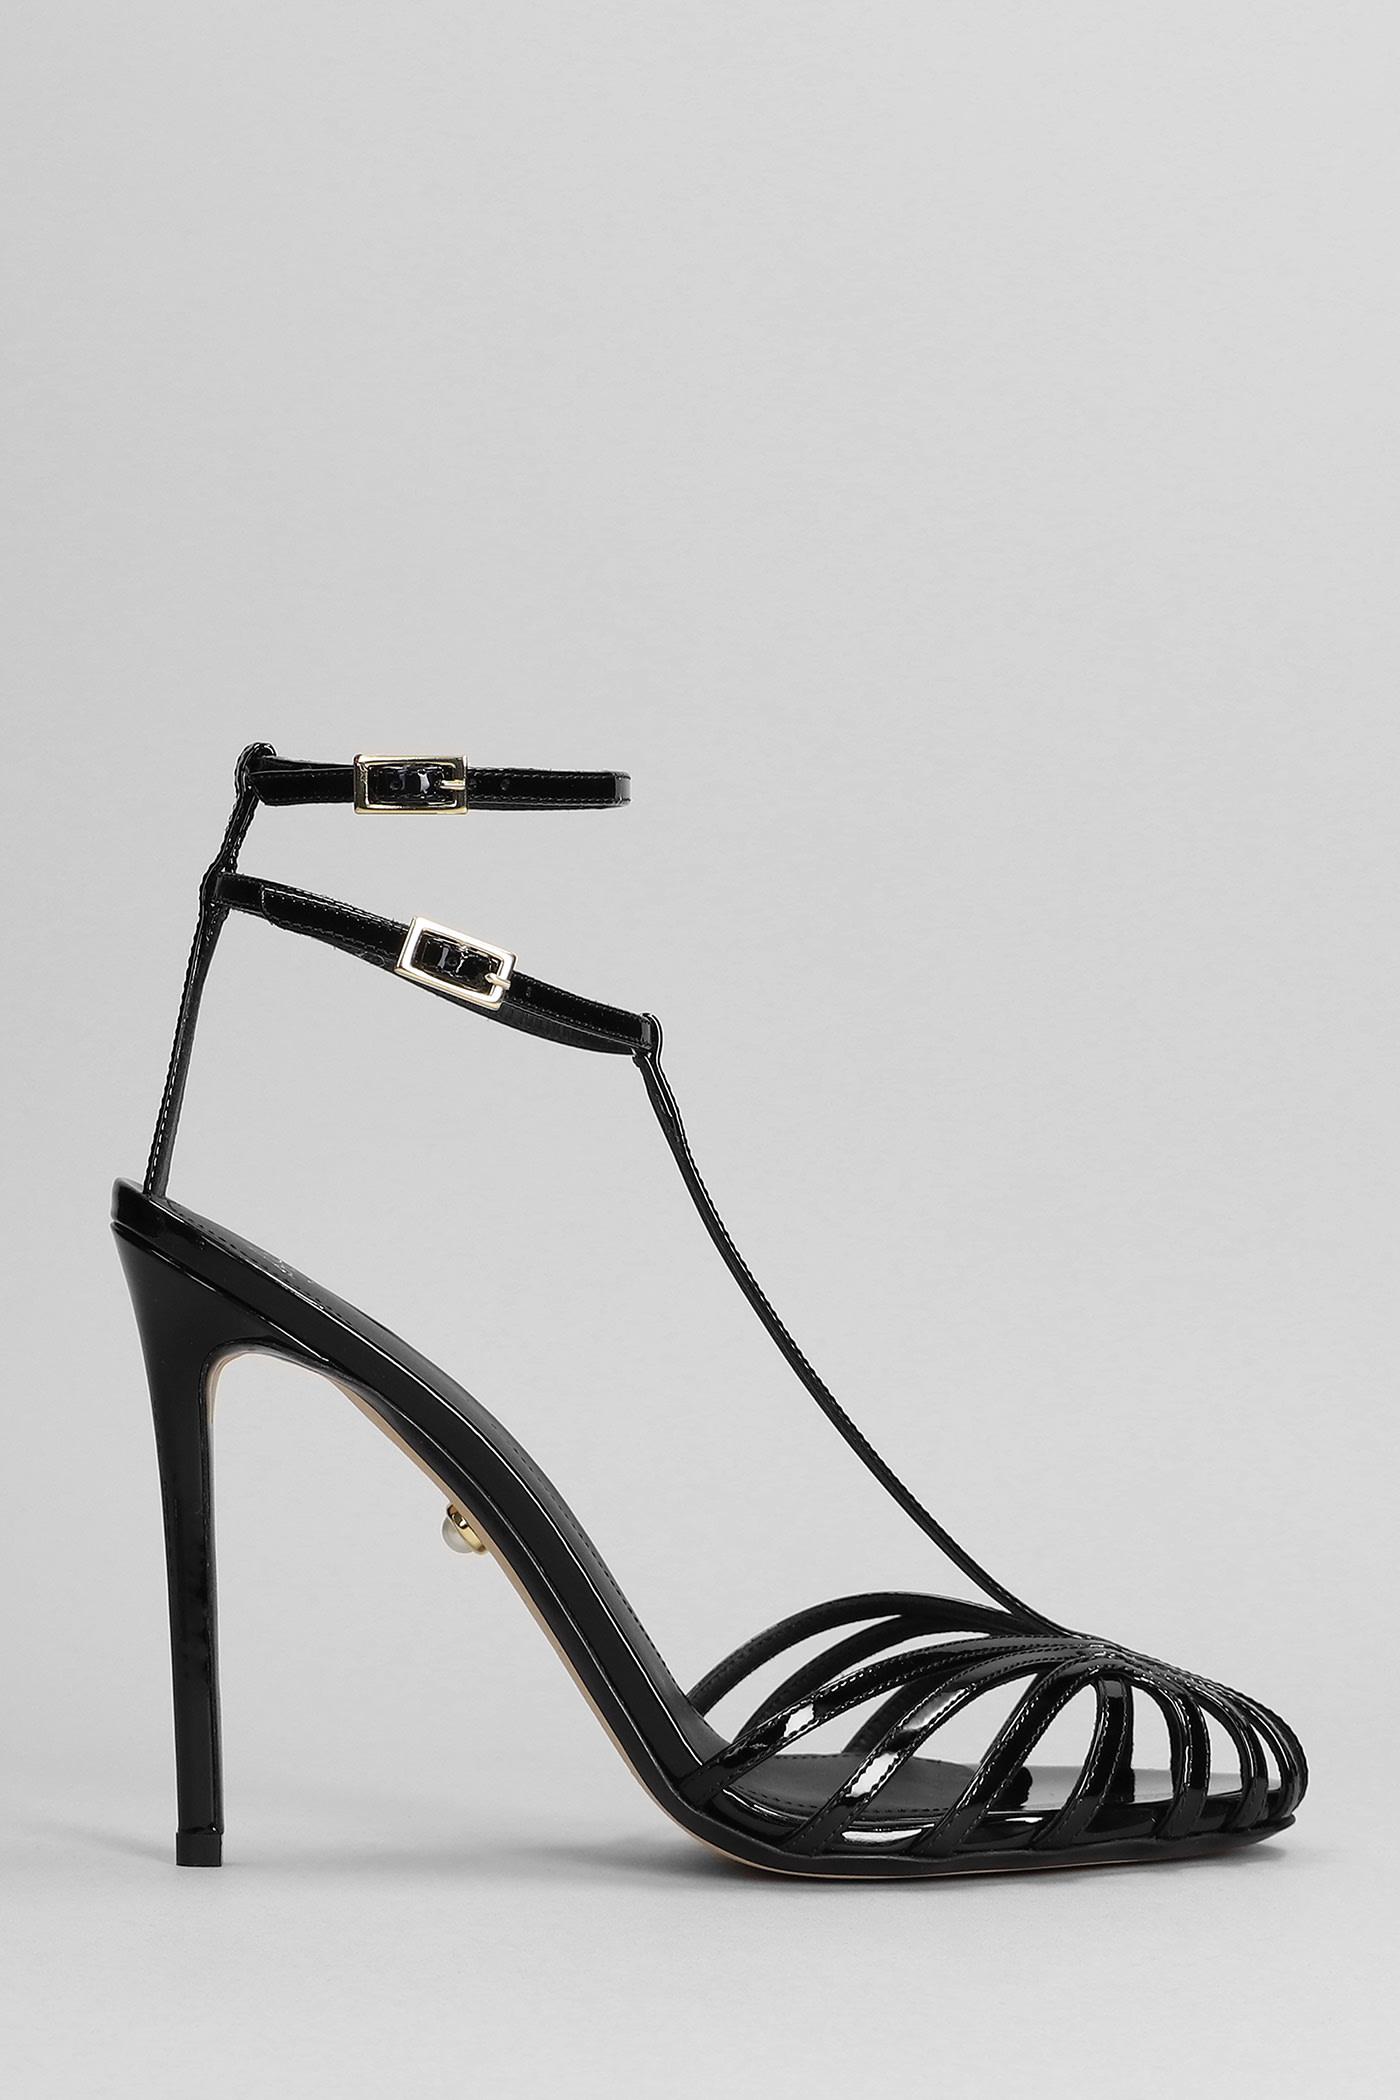 ALEVI Stella 110 Sandals In Black Patent Leather | Lyst